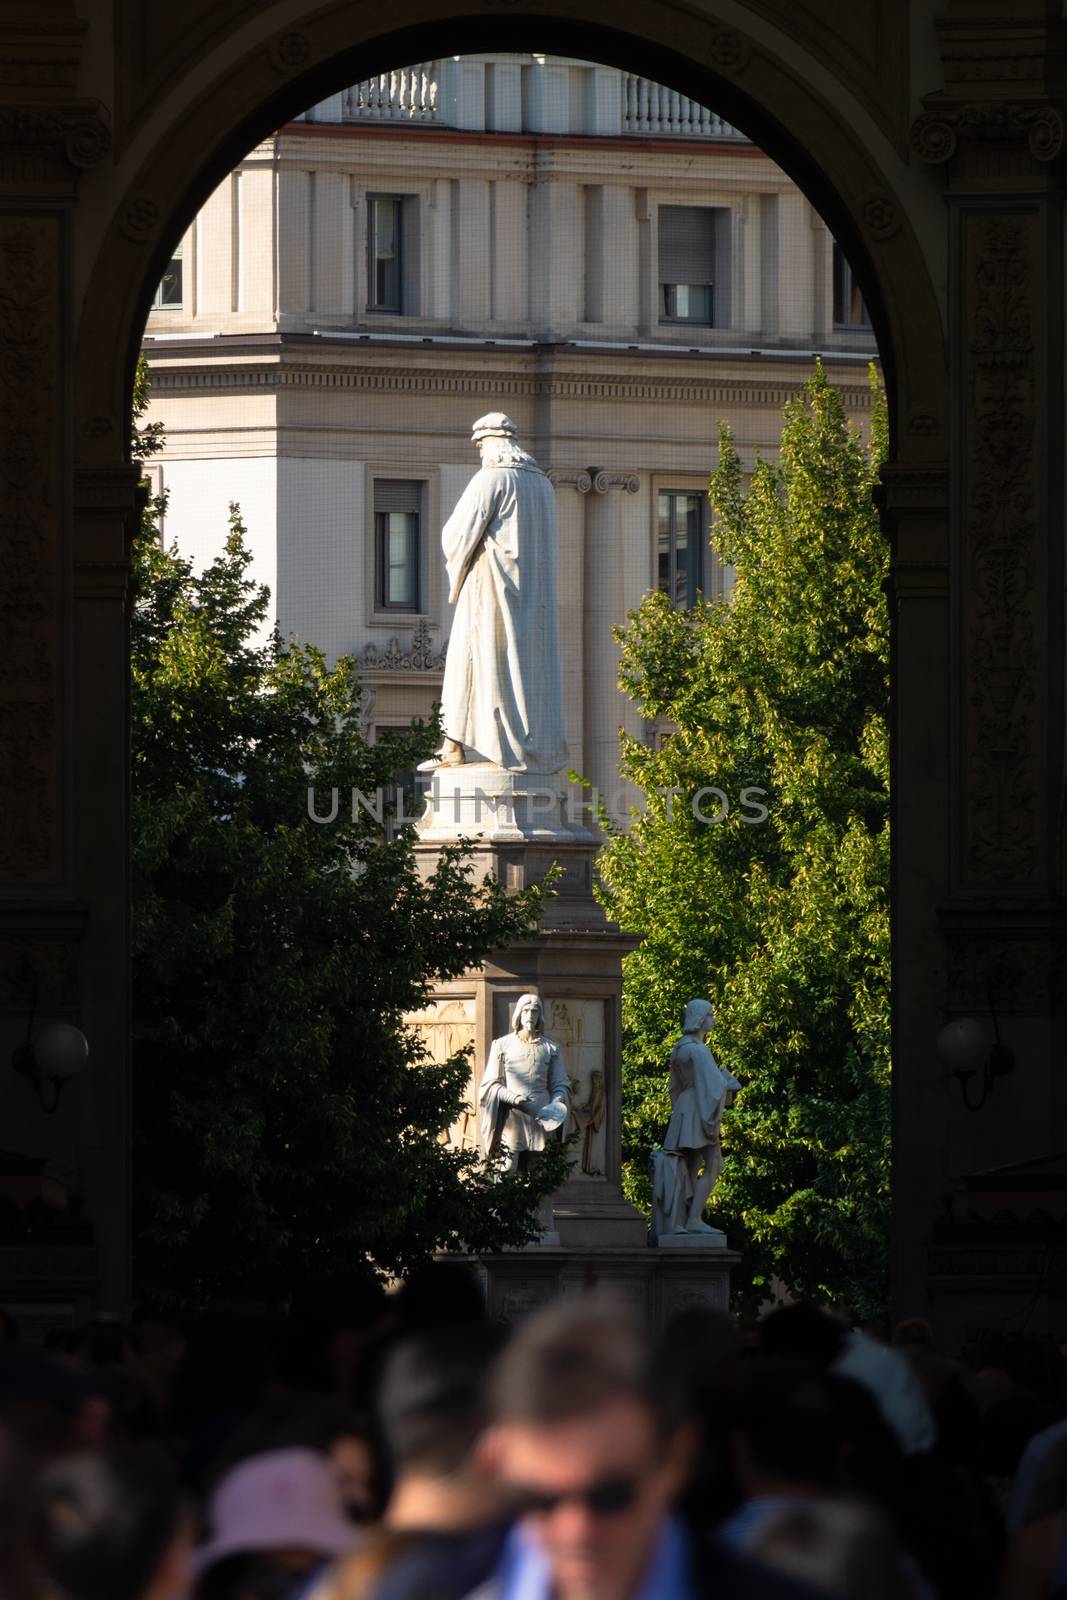 An image of the monument of Leonardo da Vinci in Milan Italy